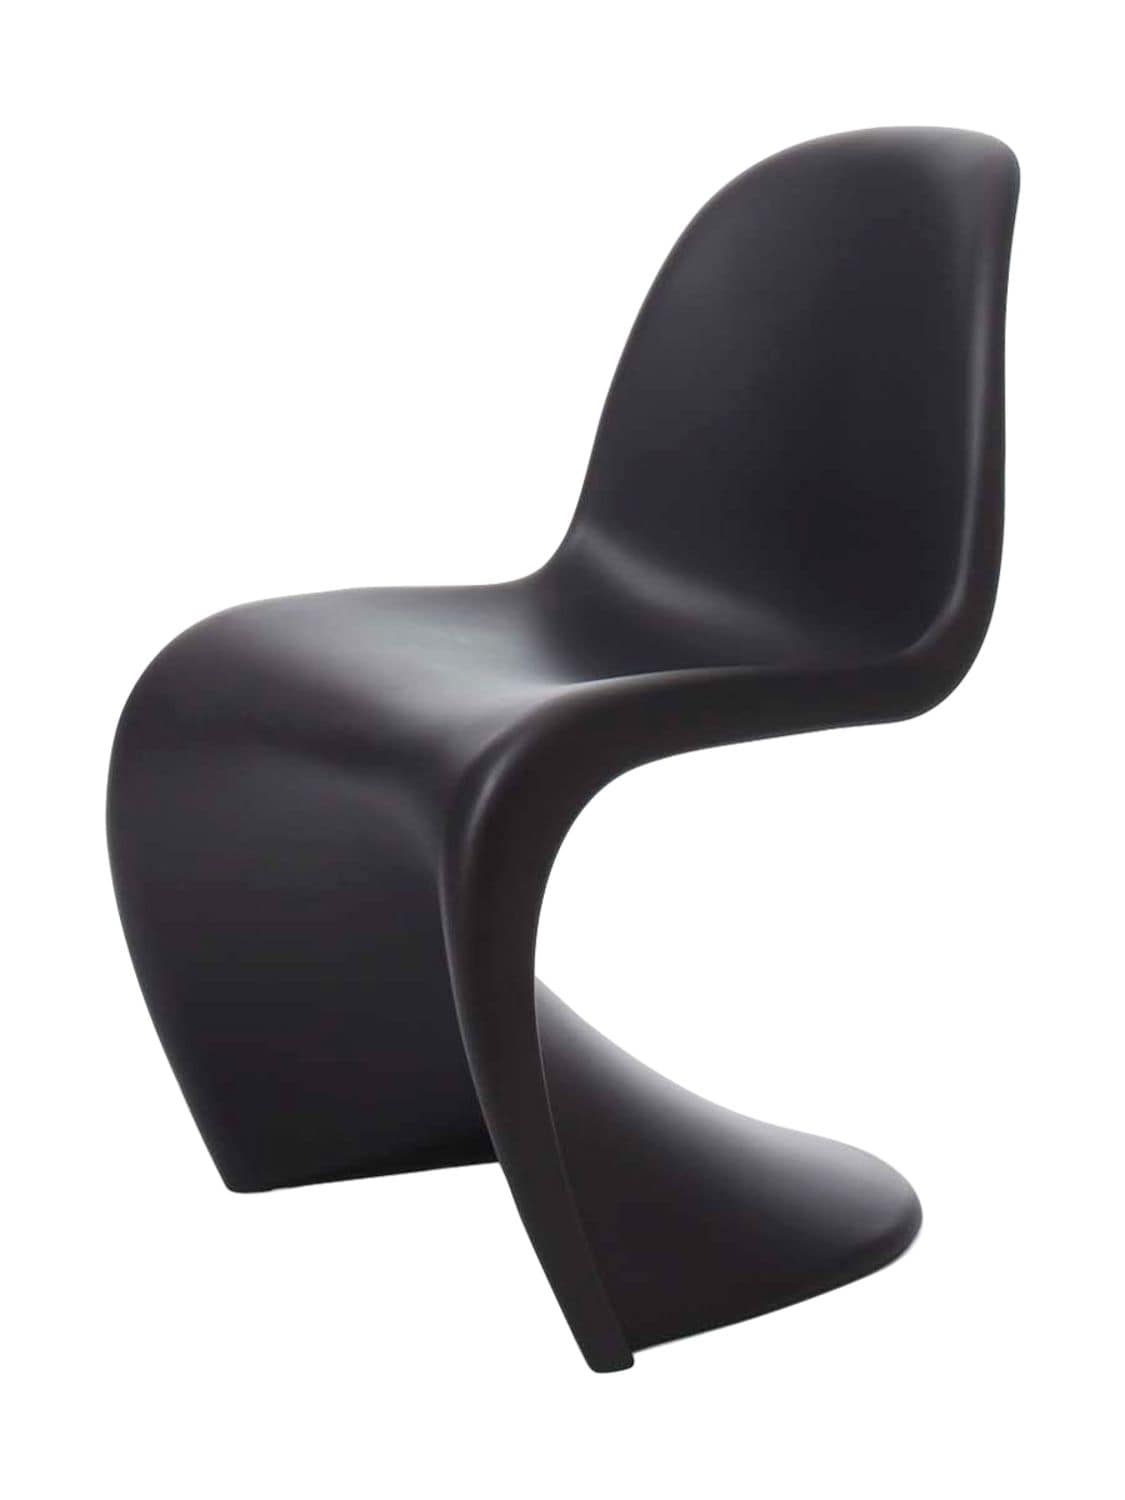 Vitra Panton Chair In Black